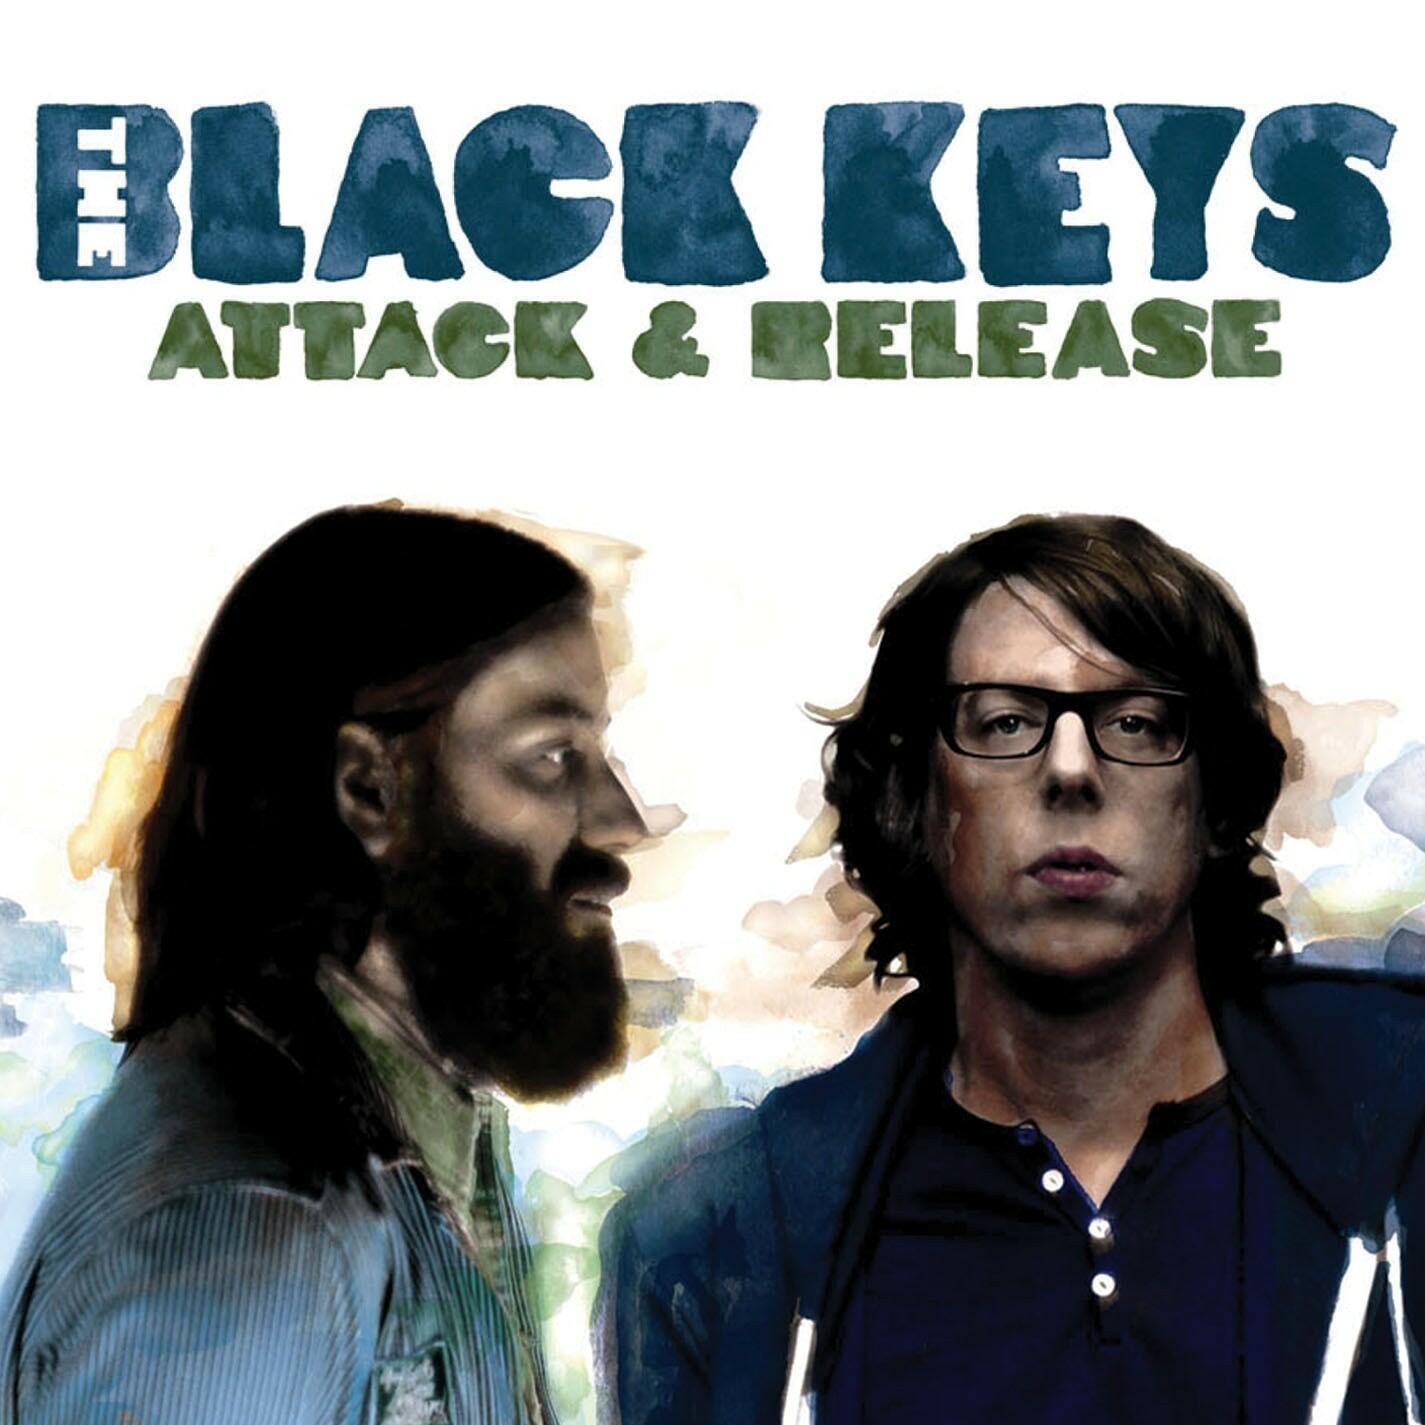 The Black Keys Attack & Release iHeart